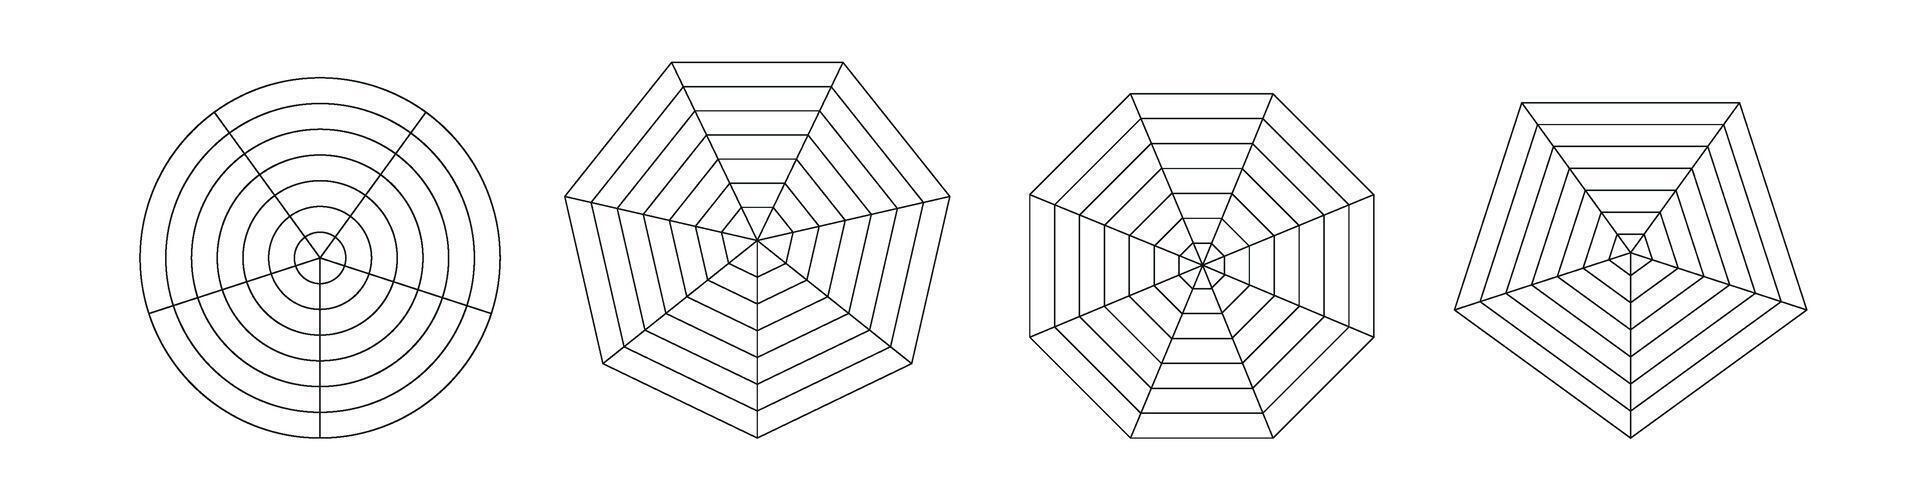 pentágono y hexágono gráfico , para 5 5 punto Radar o araña diagramas para visualizante datos con estructurado grafico acercarse. plano vector ilustración aislado en blanco antecedentes.